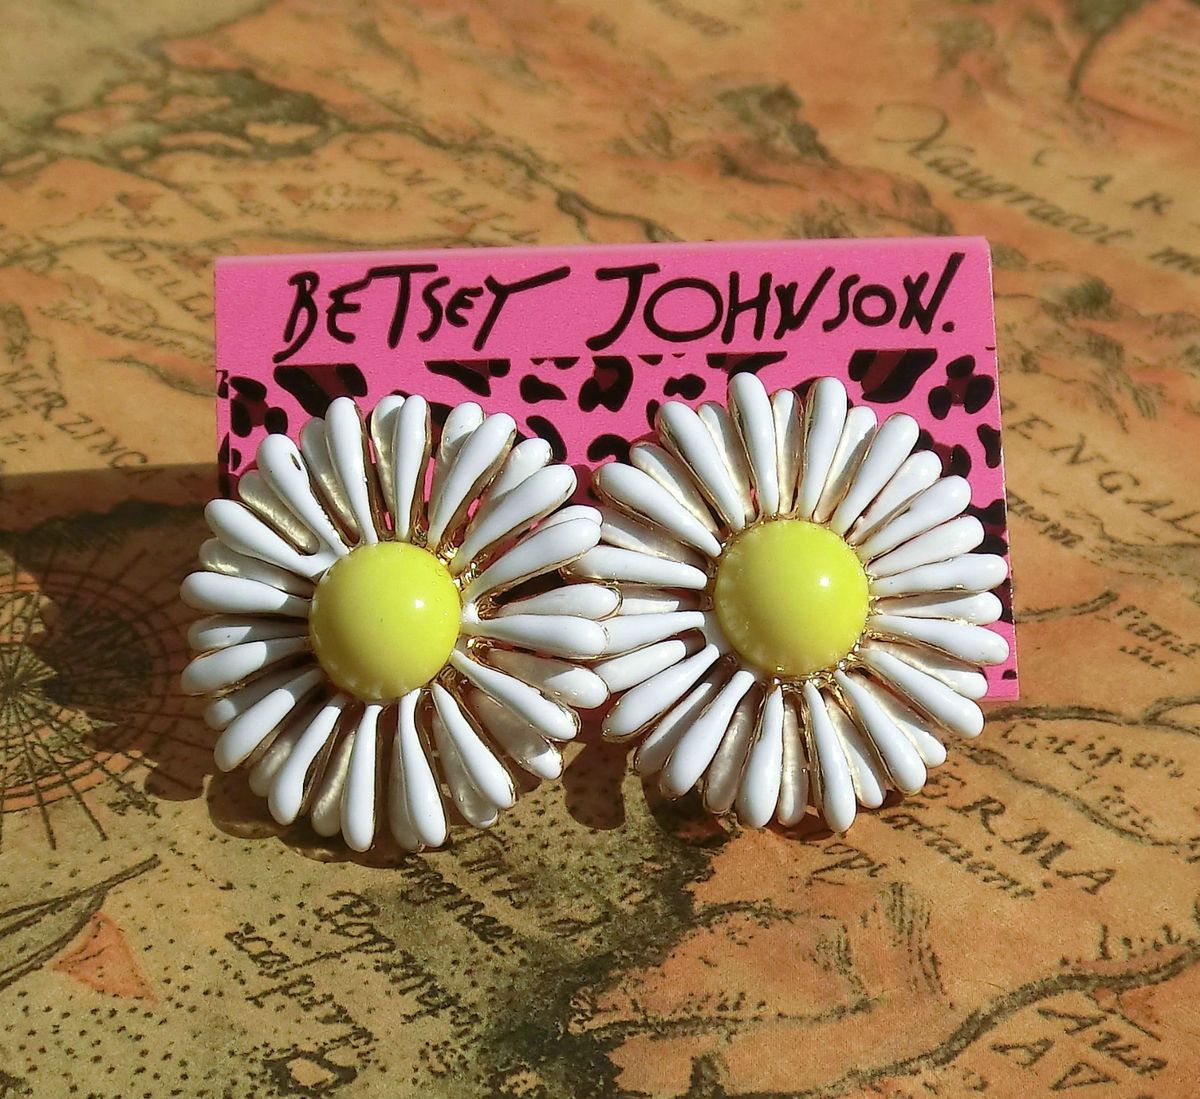  Johnson Drop glaze happiness chrysanthemum flower stud earrings E328